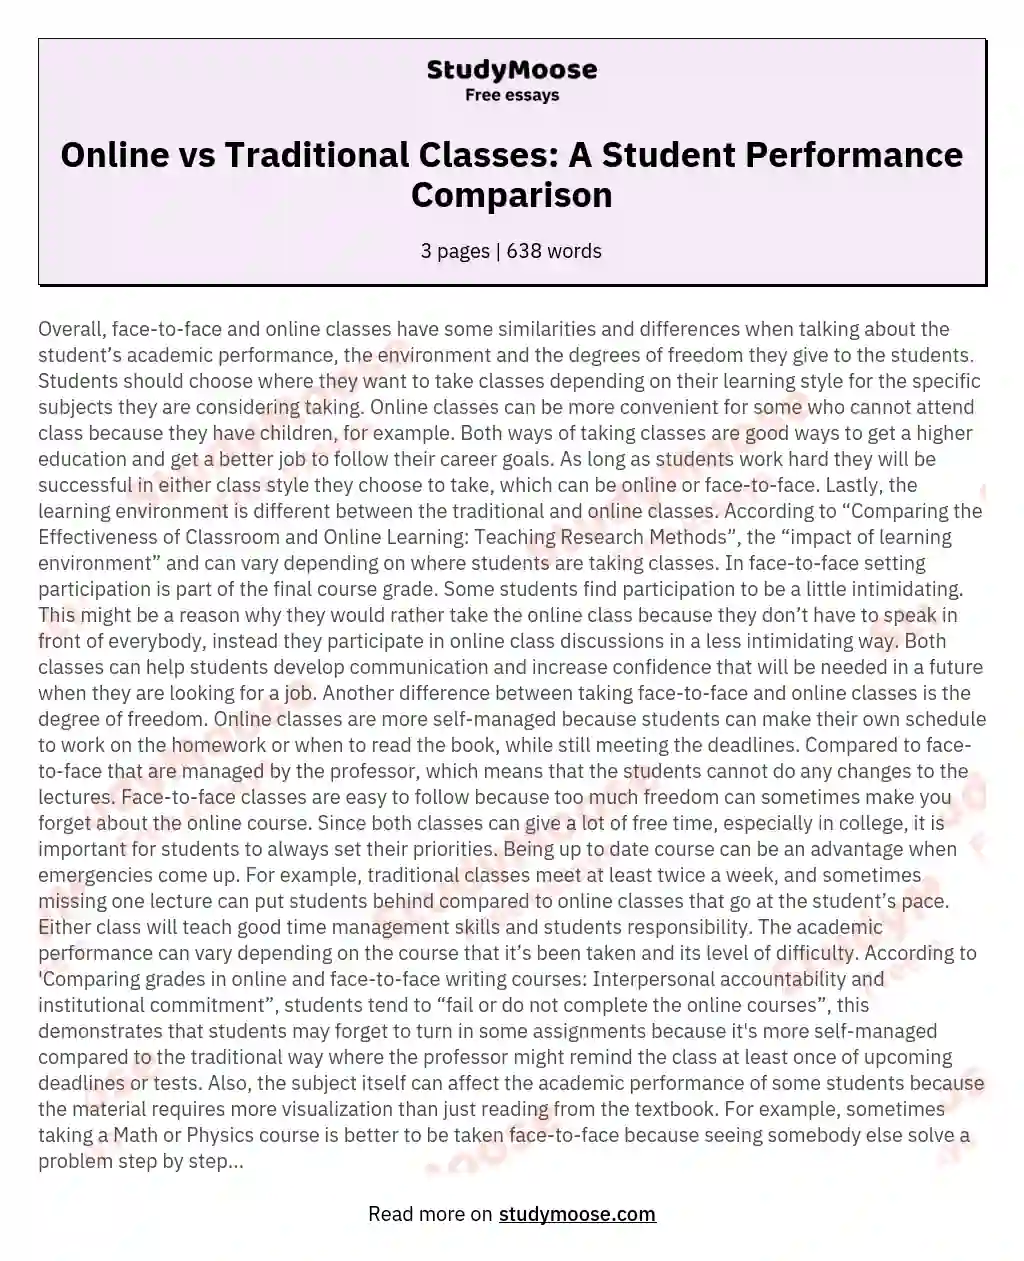 Online vs Traditional Classes: A Student Performance Comparison essay